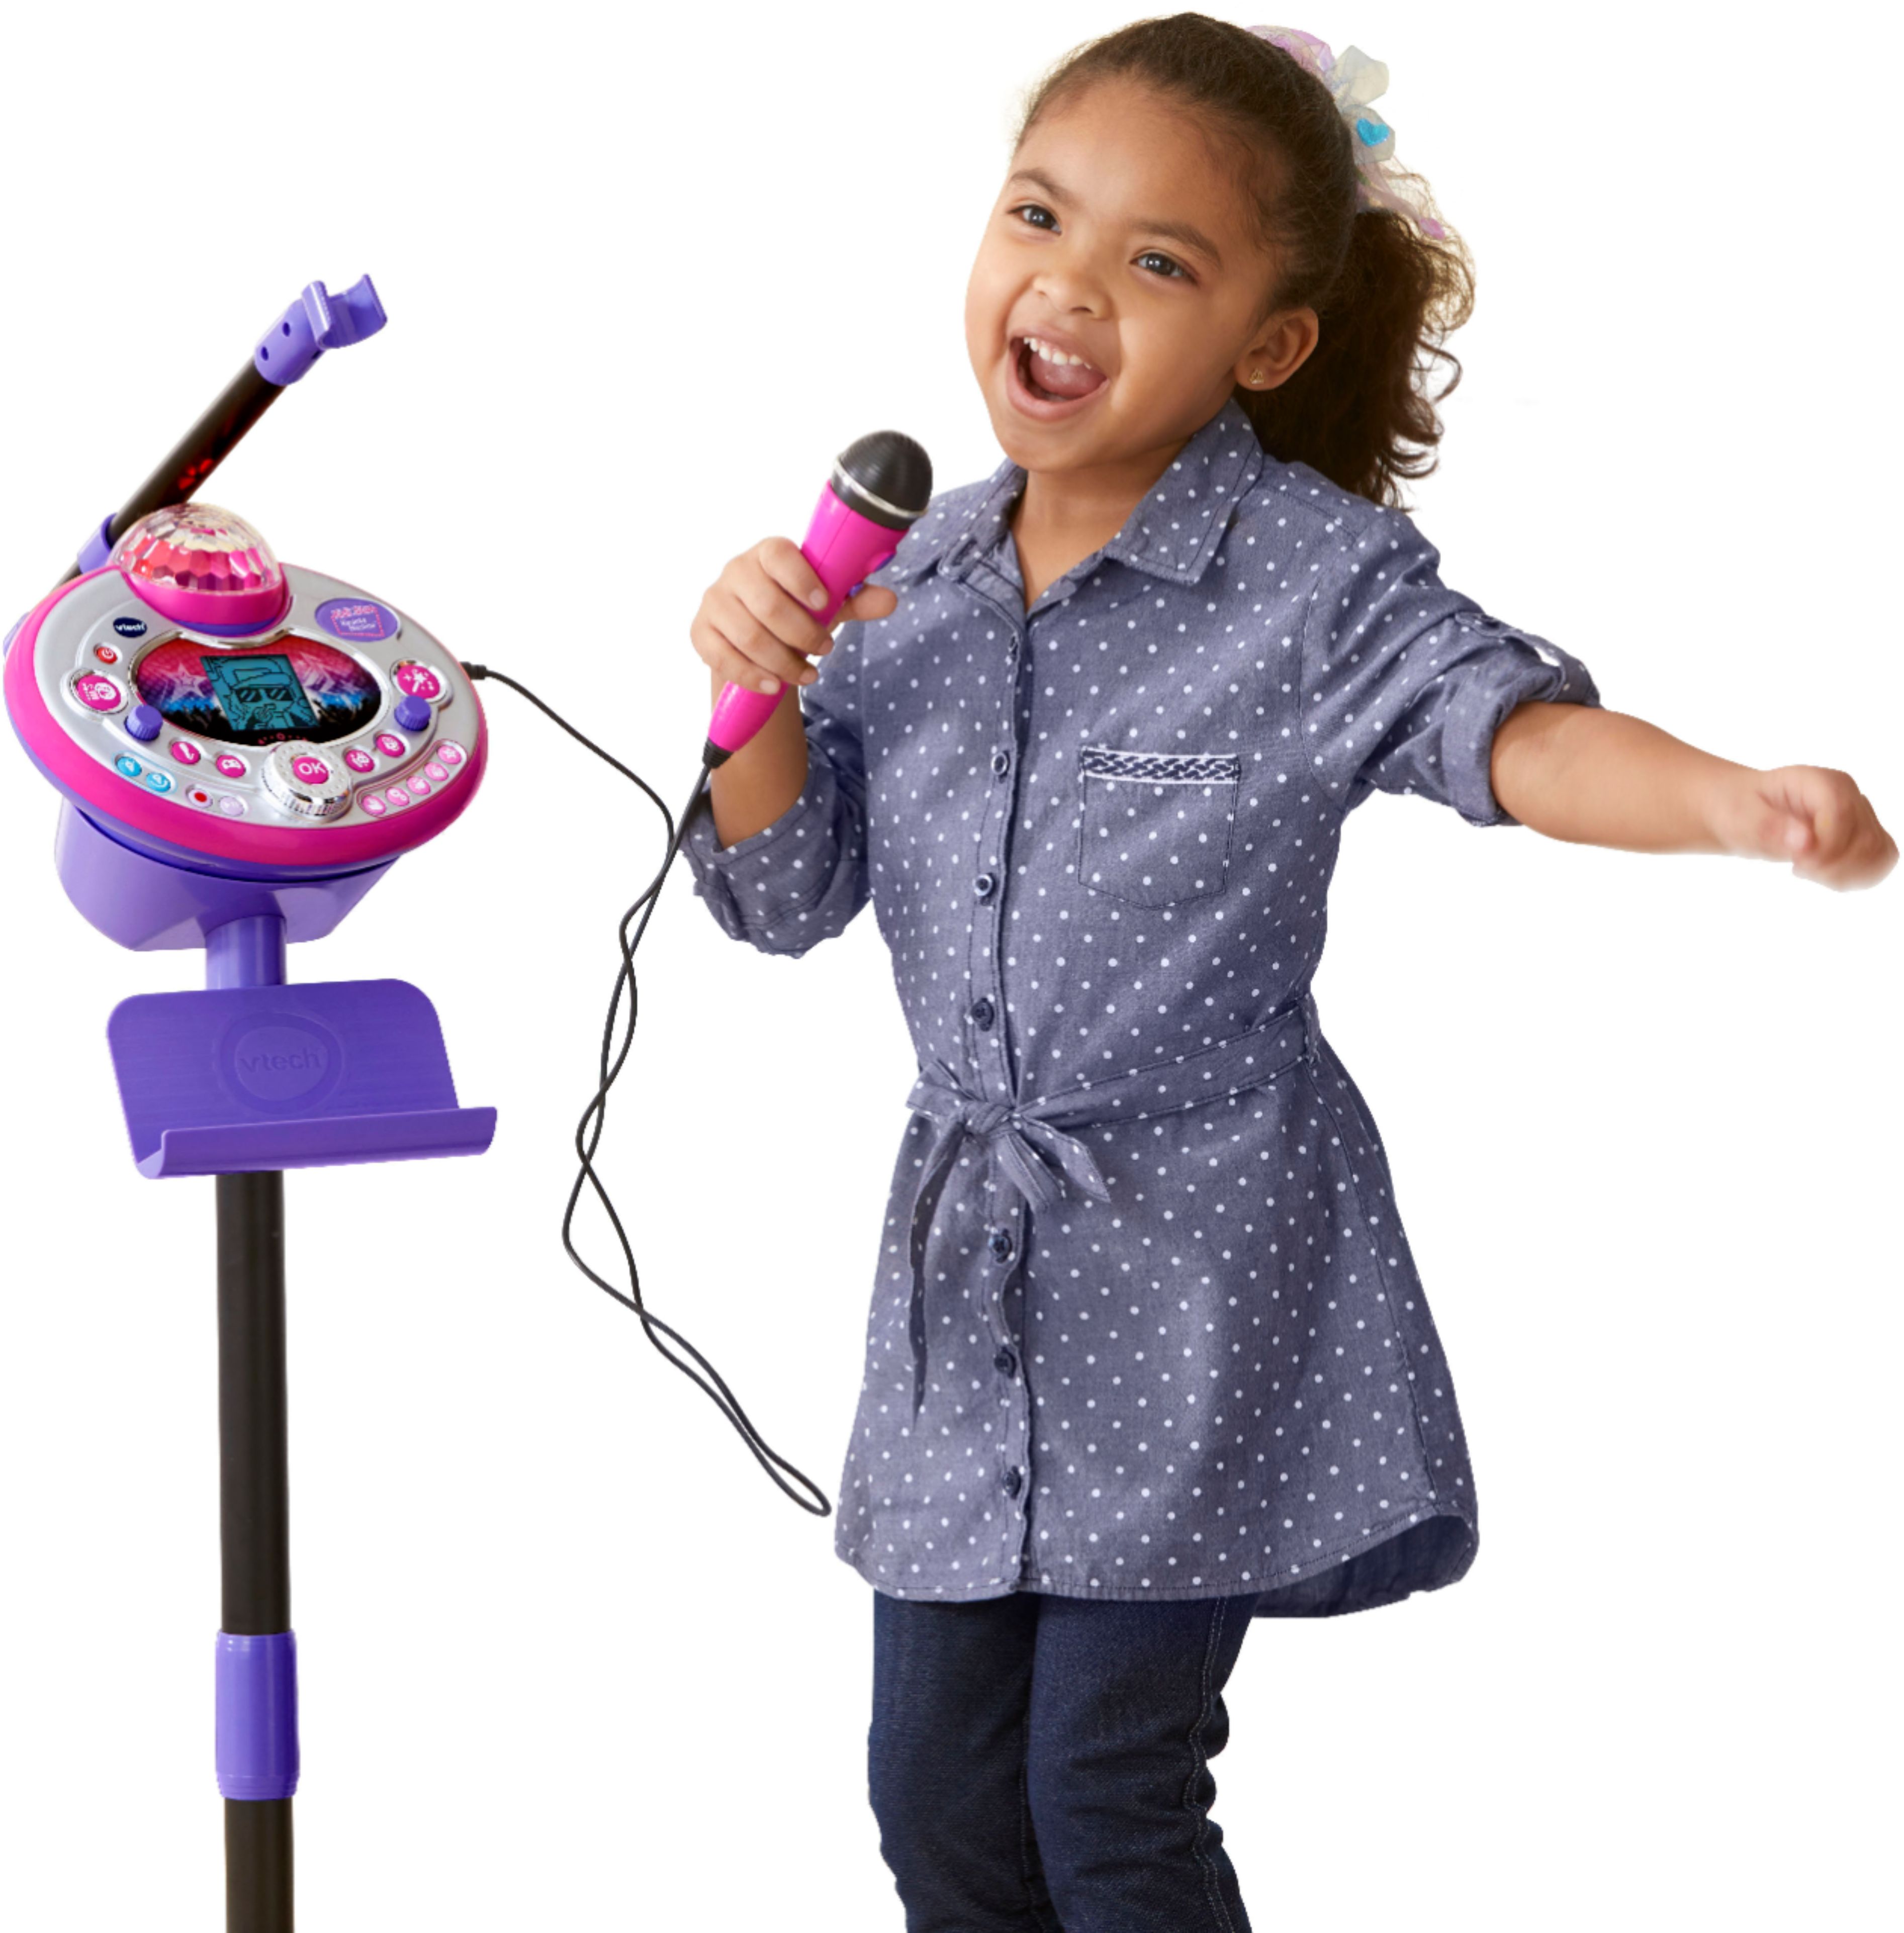 VTech Kidi Star Karaoke Machine, Pink/Purple - Machine Only -REPLACEMENT  PART